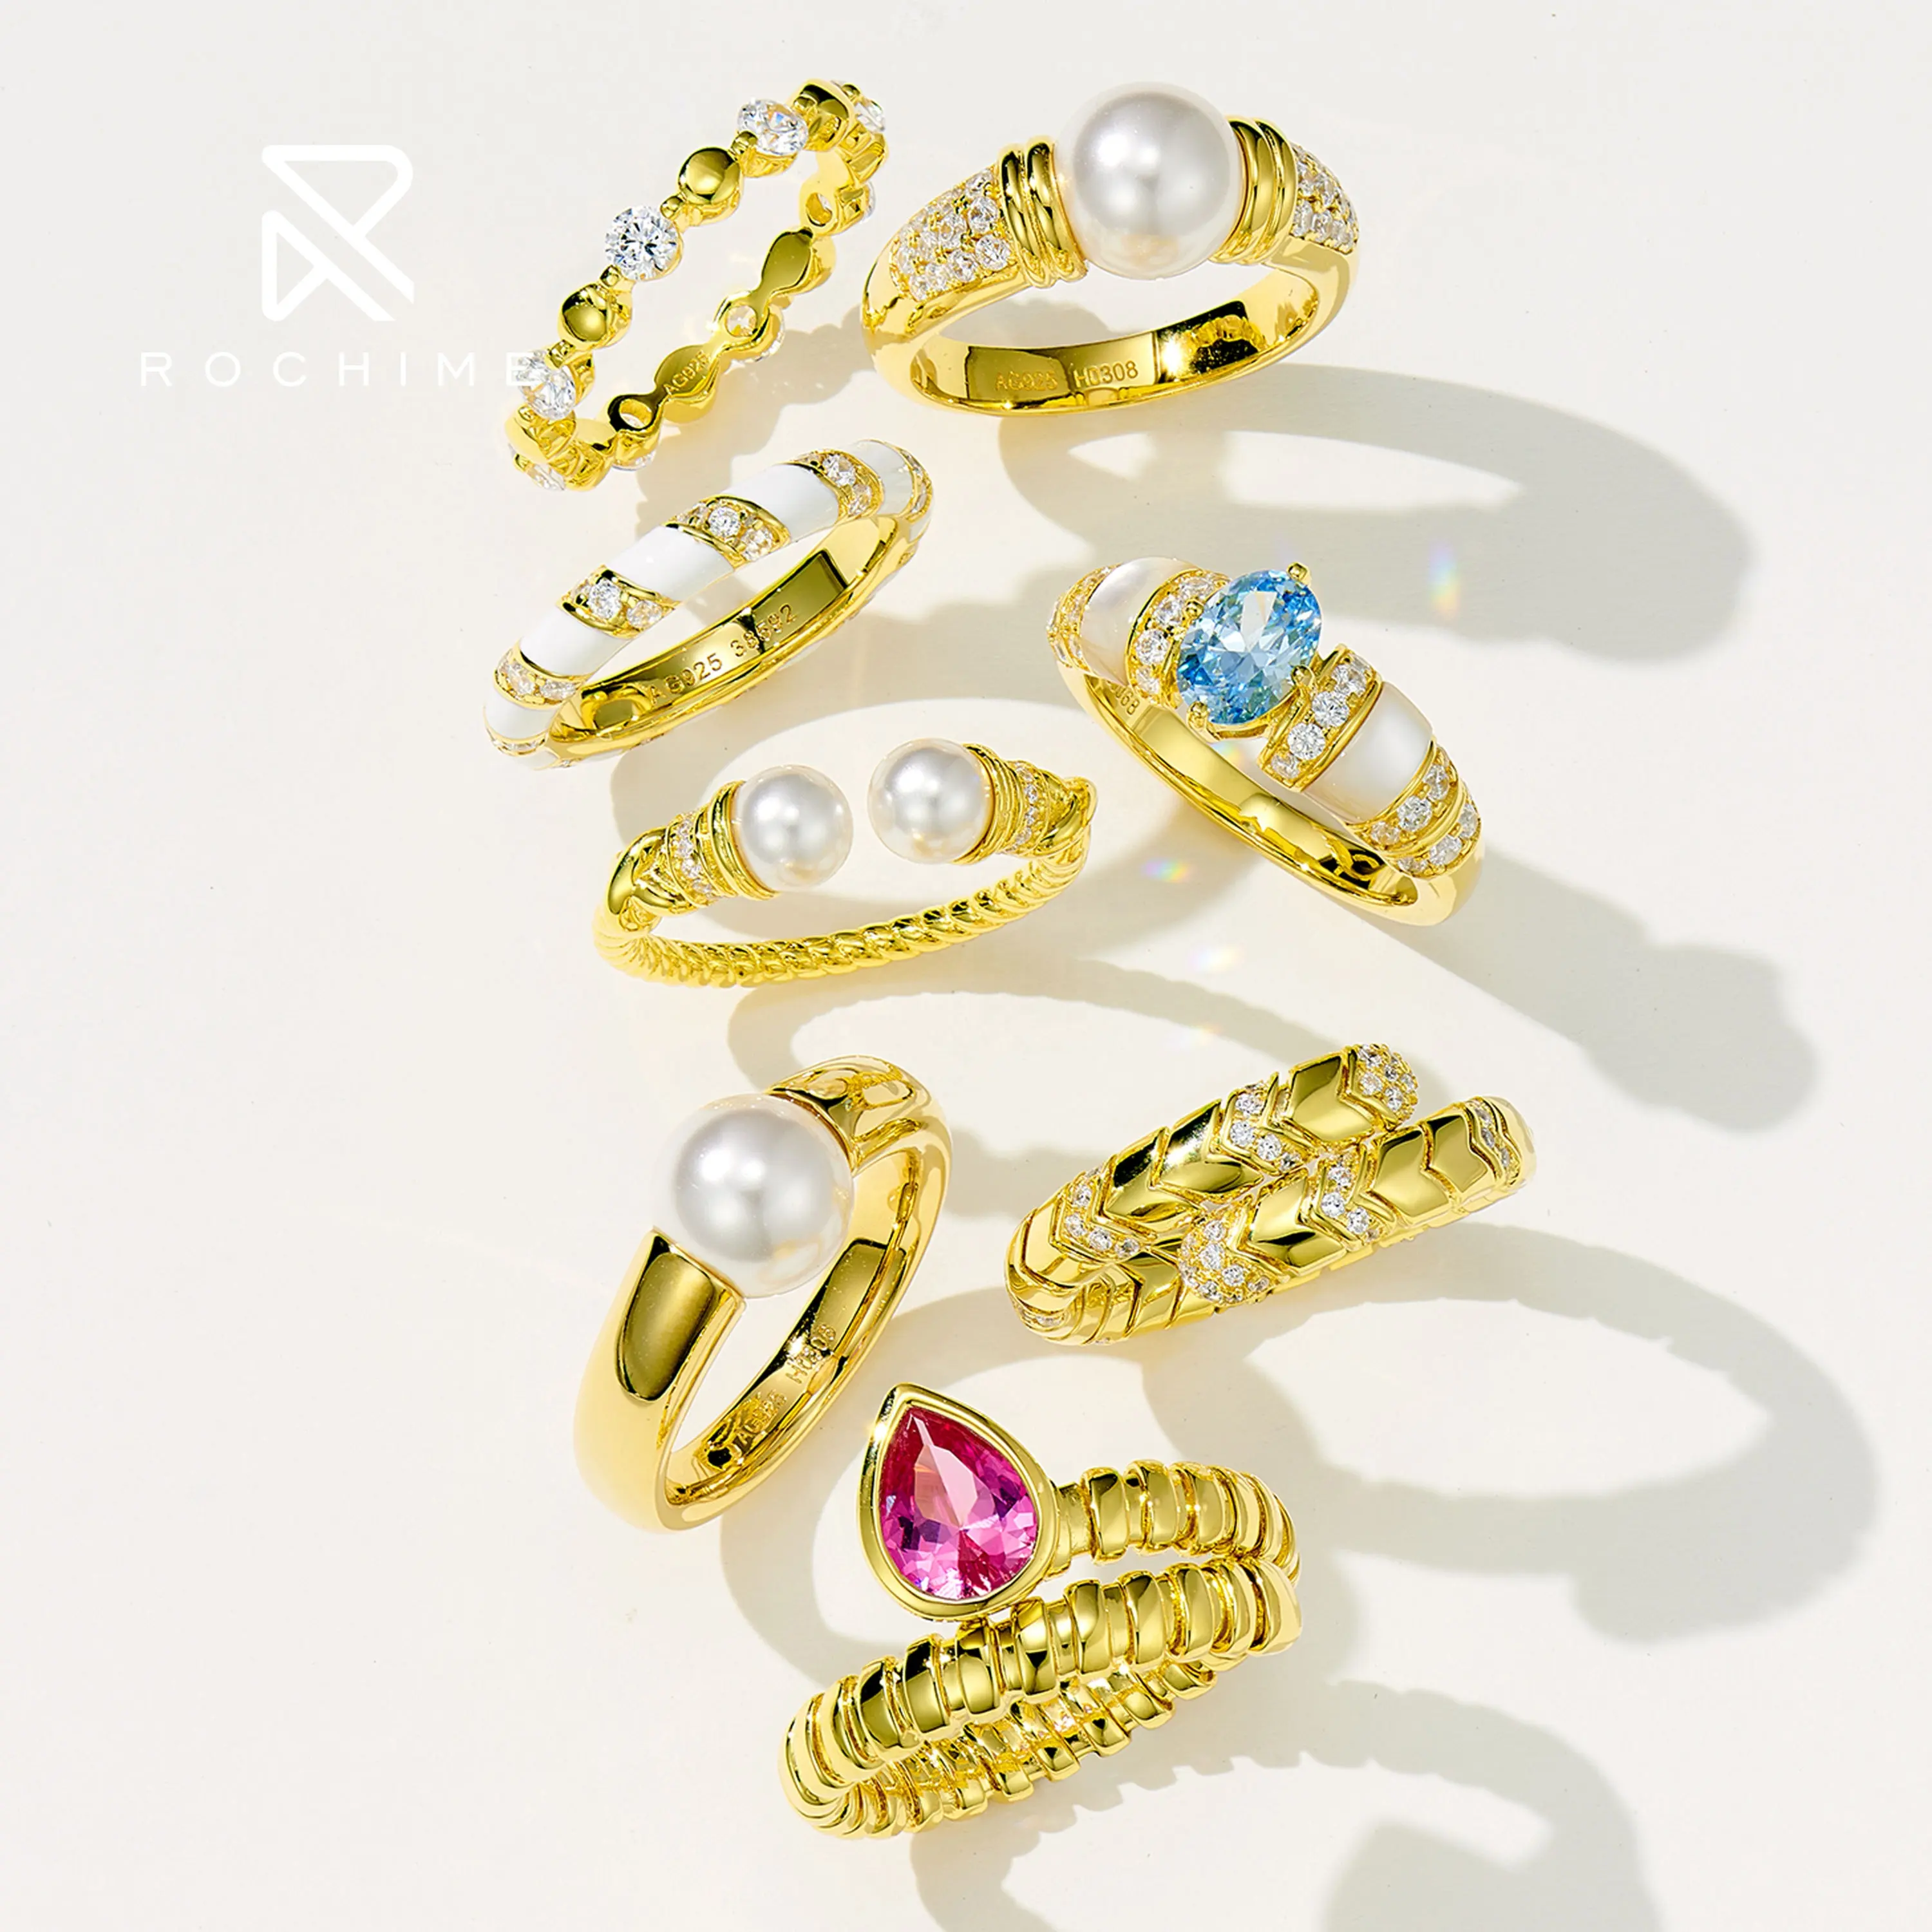 Rochime vintage luxo anel 925 prata esterlina ouro amarelo chapeado pérola gemstone moda jóias para as mulheres